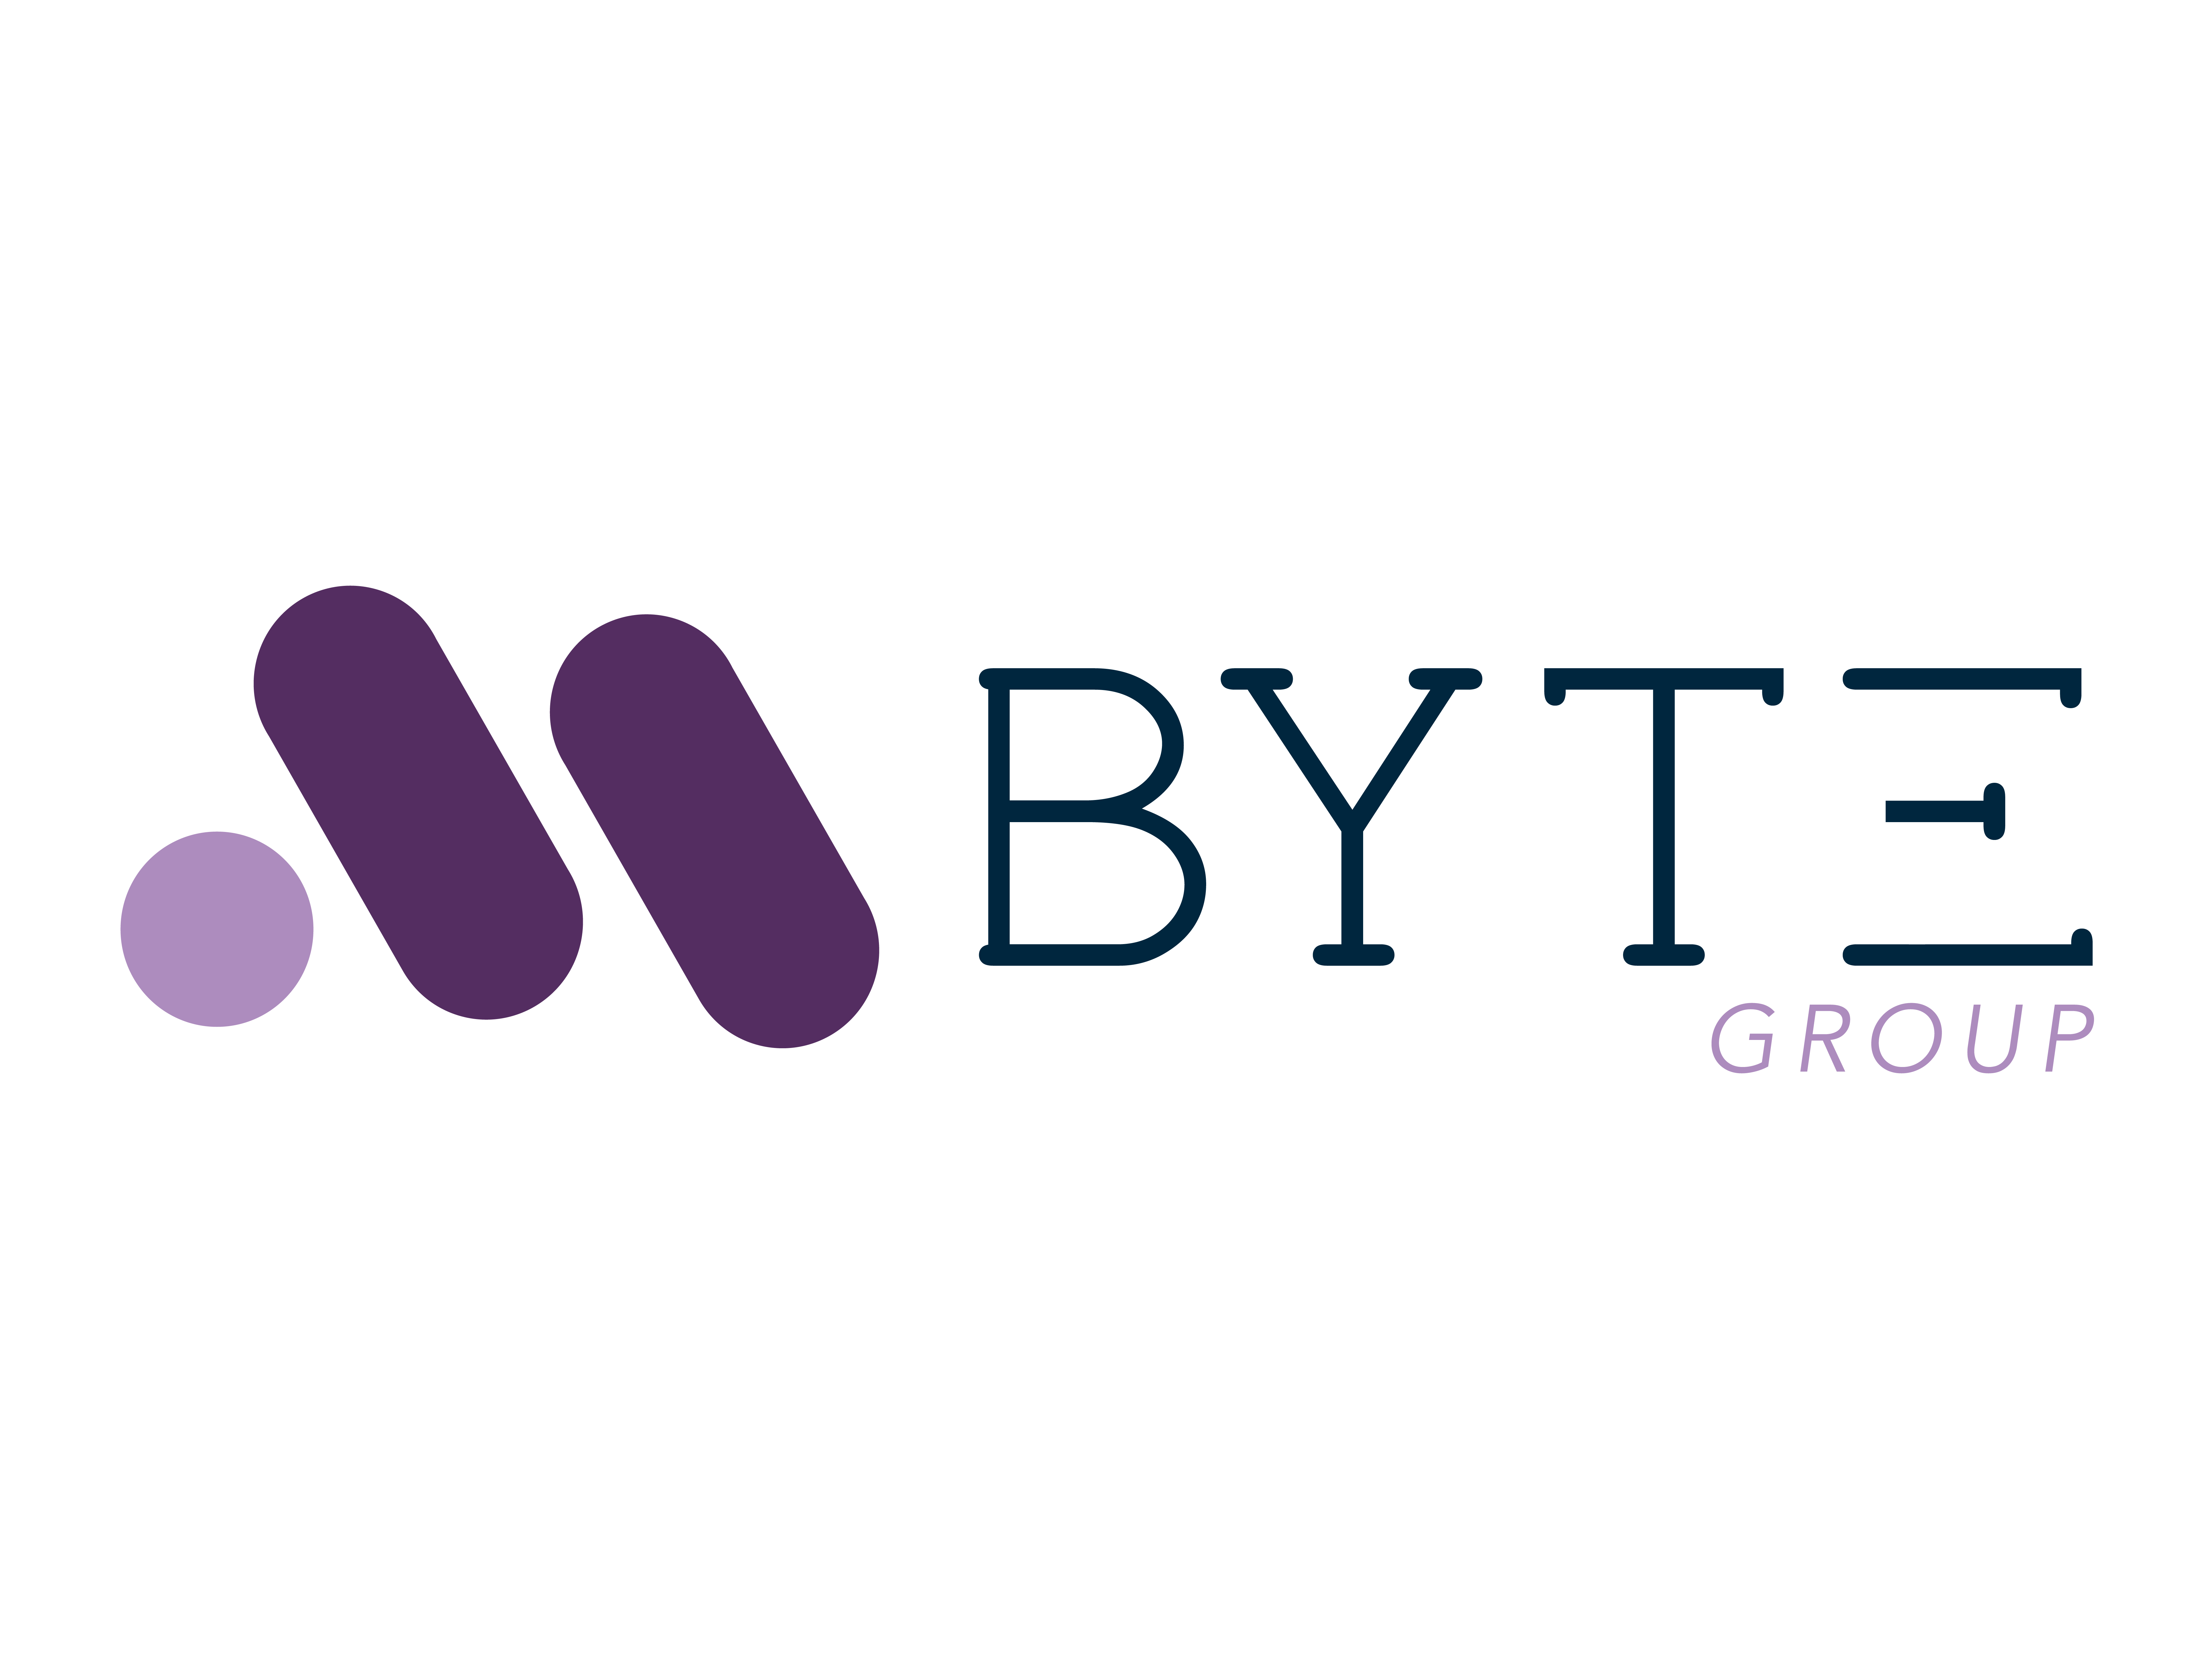 MonoByte Group